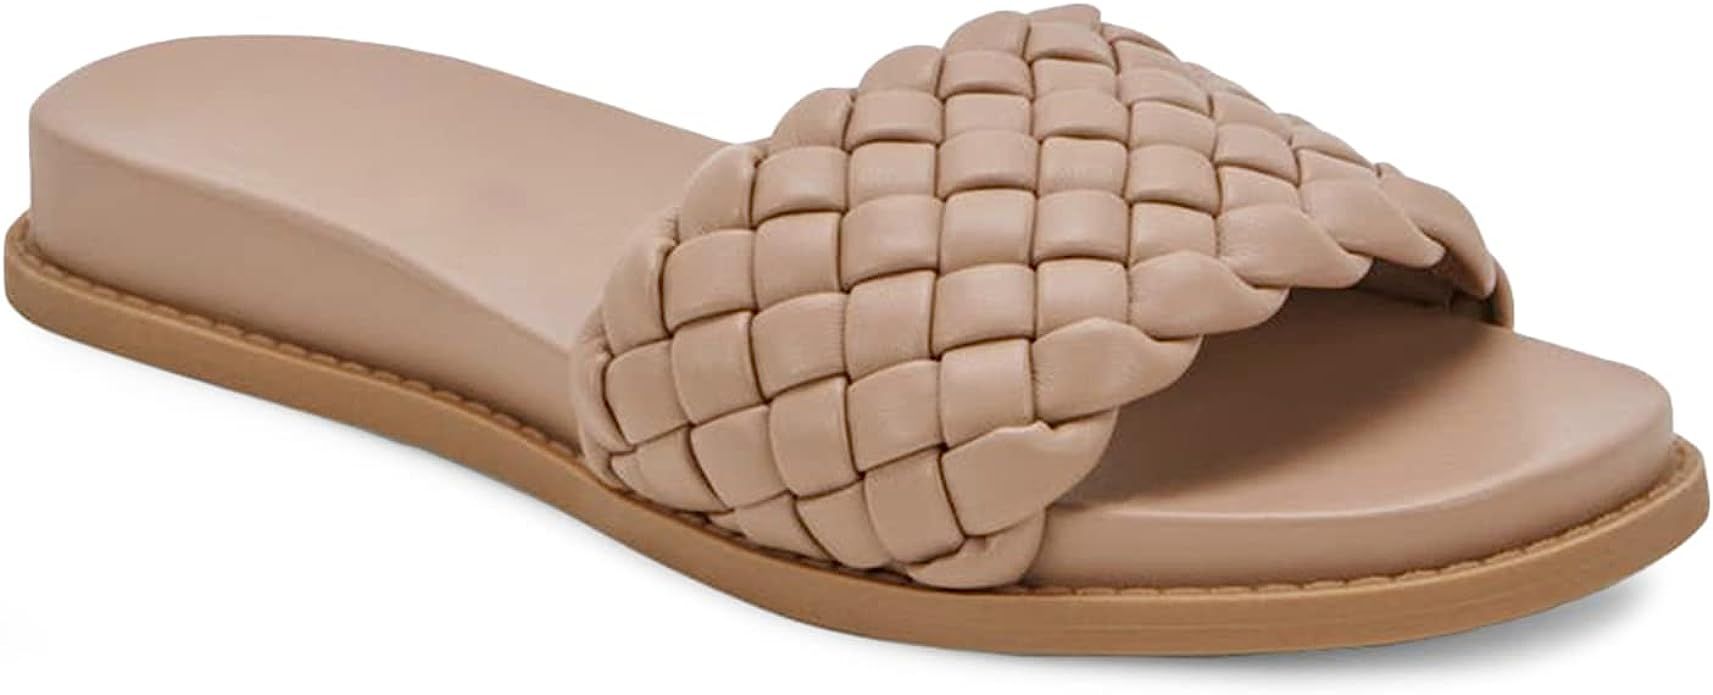 gihubafuil Women’s Flat Sandals Fashion Round Open Toe Braided Strap Beach Slip On Slides Casua... | Amazon (US)